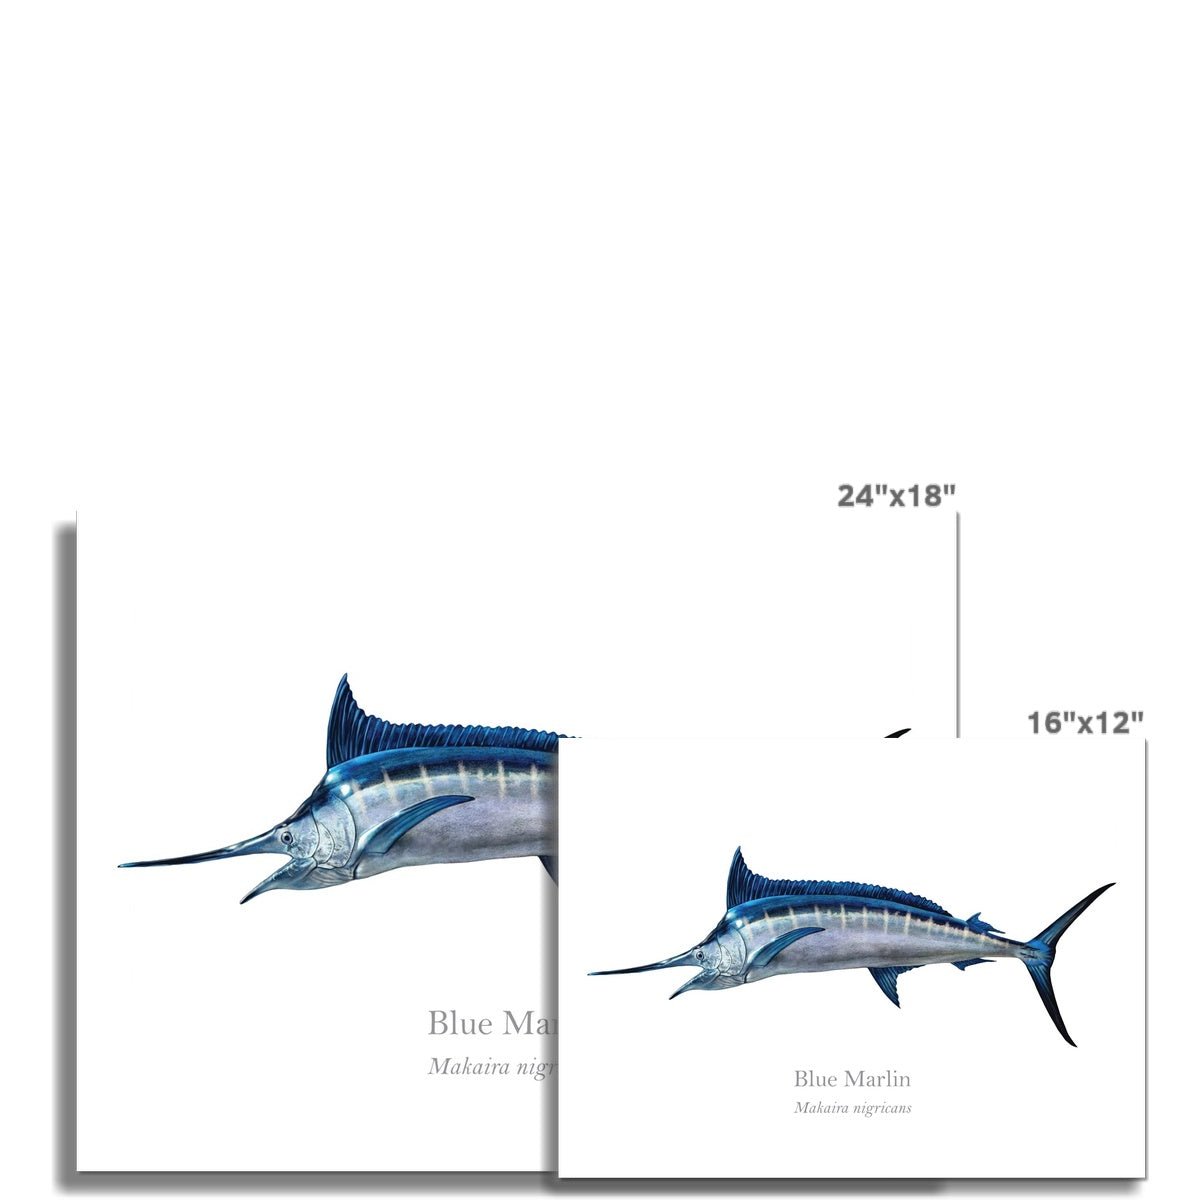 Blue Marlin - Art Print - With Scientific Name - madfishlab.com